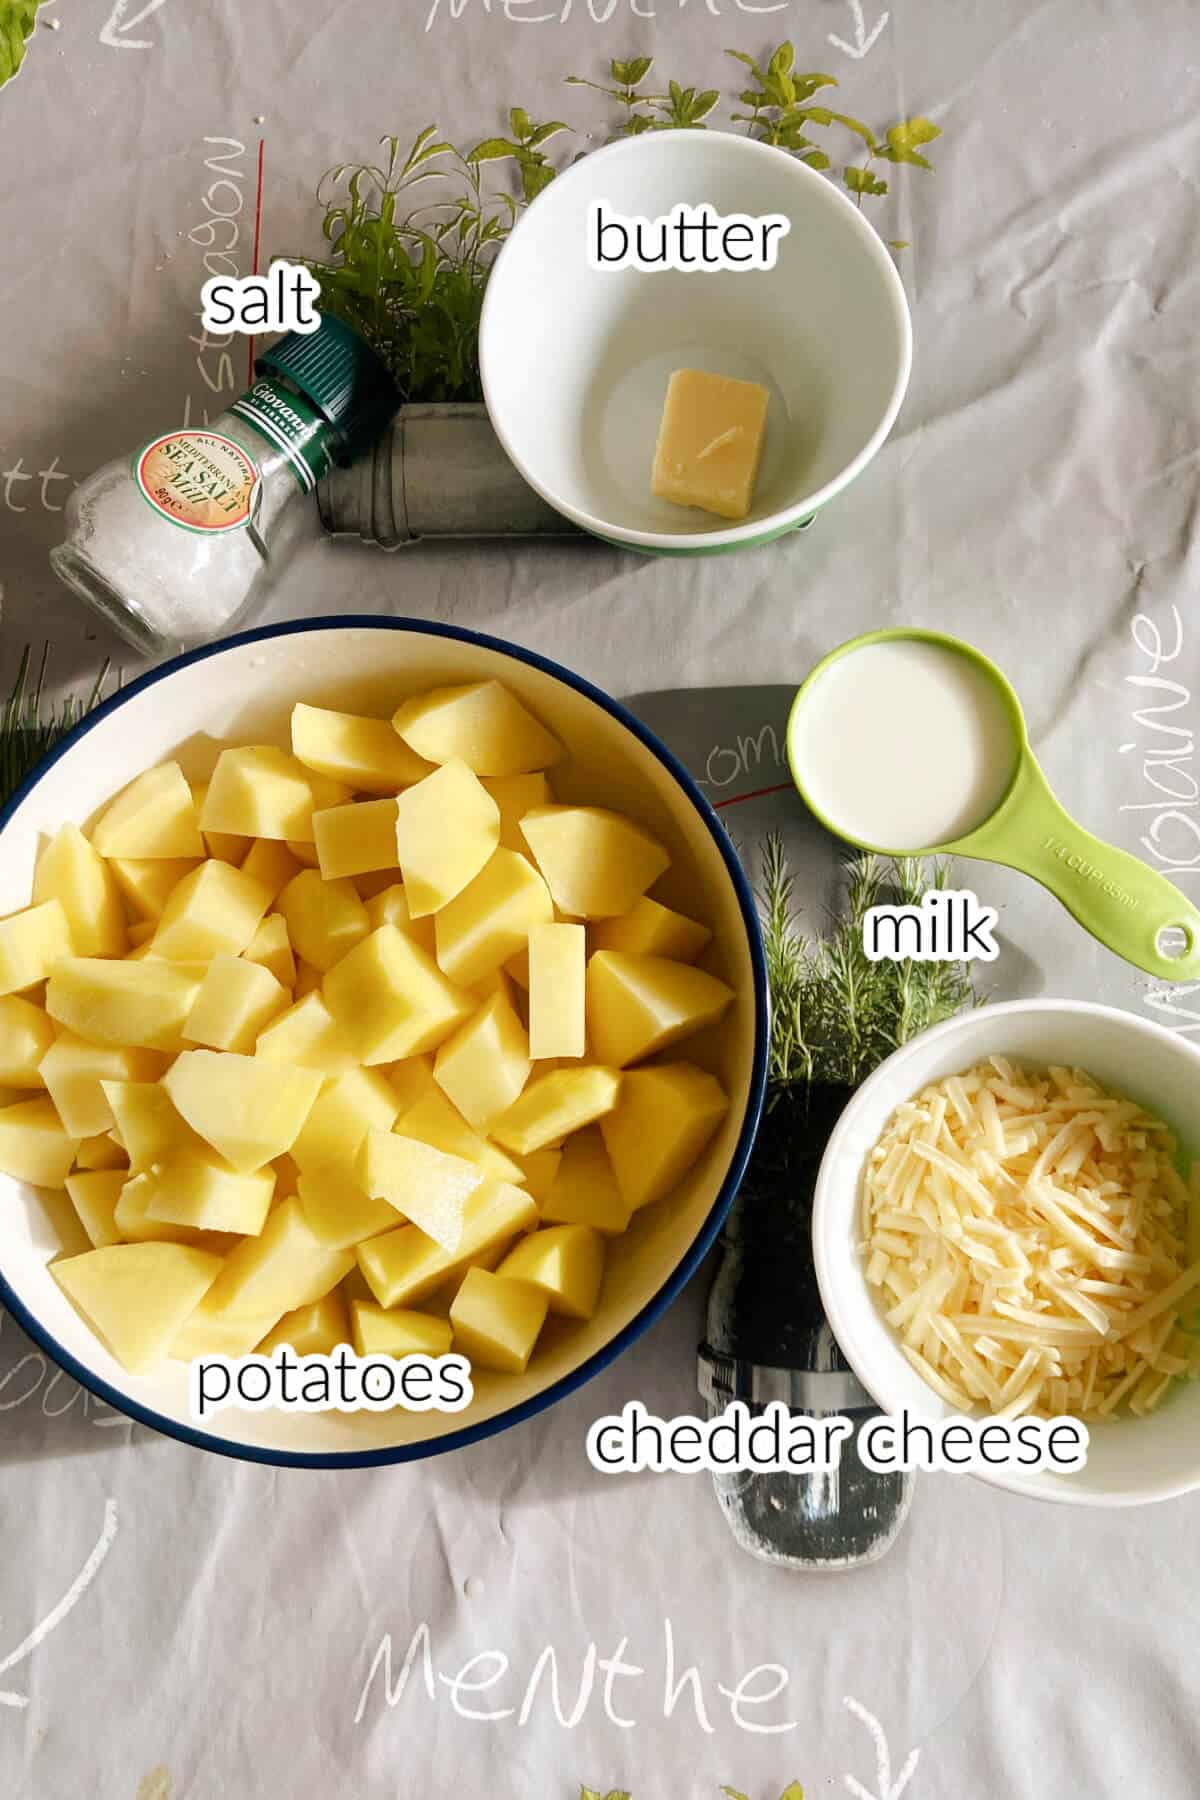 Ingredients needed to make mashed potatoes.